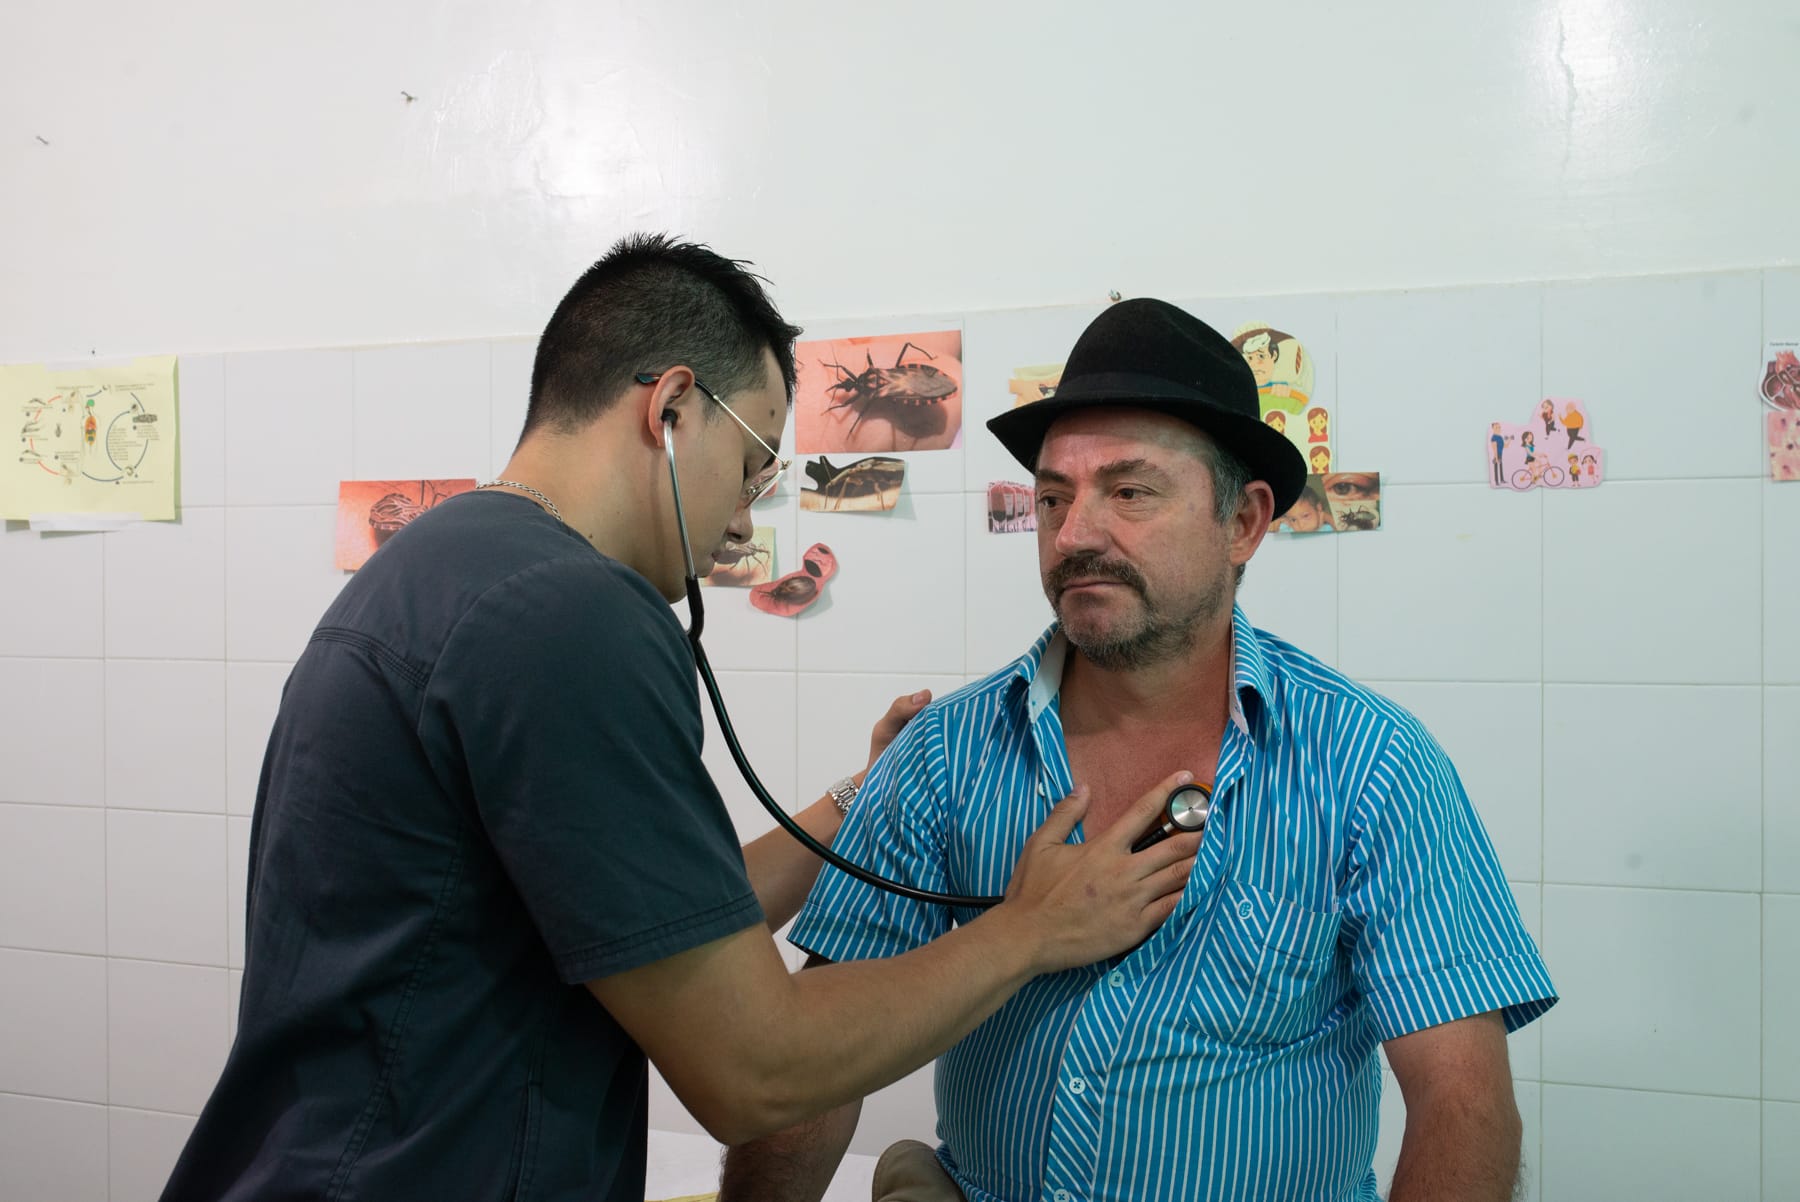 Healthcare worker with patient